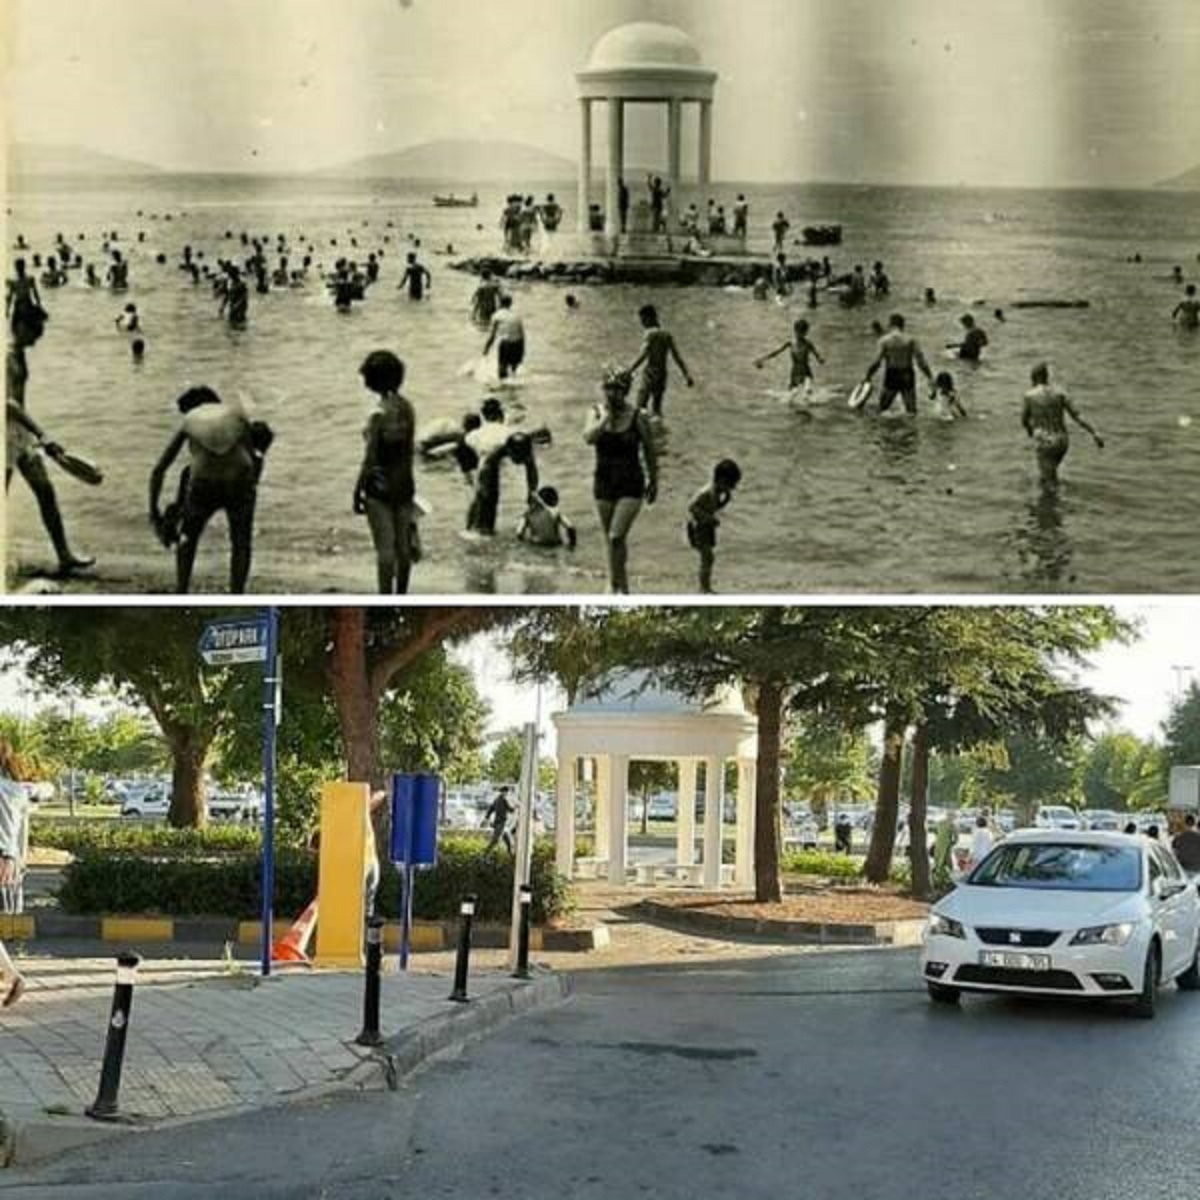 "Süreyya Beach In 1940s And Nowadays, Istanbul"